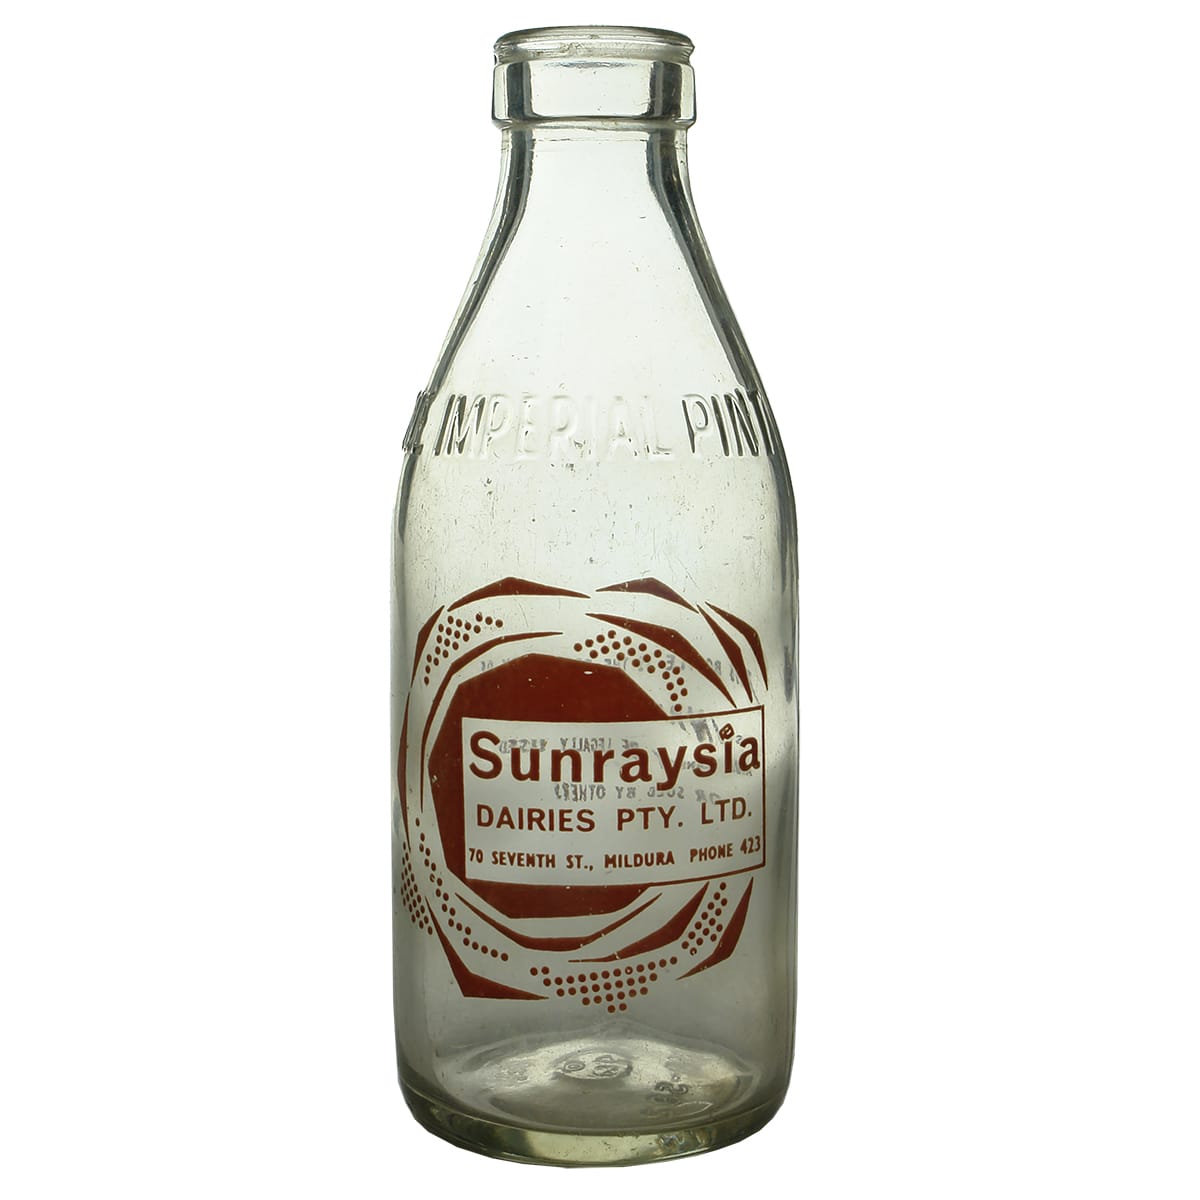 Milk. Sunraysia Dairies Pty. Ltd, Mildura. Ceramic label. 1 Pint.